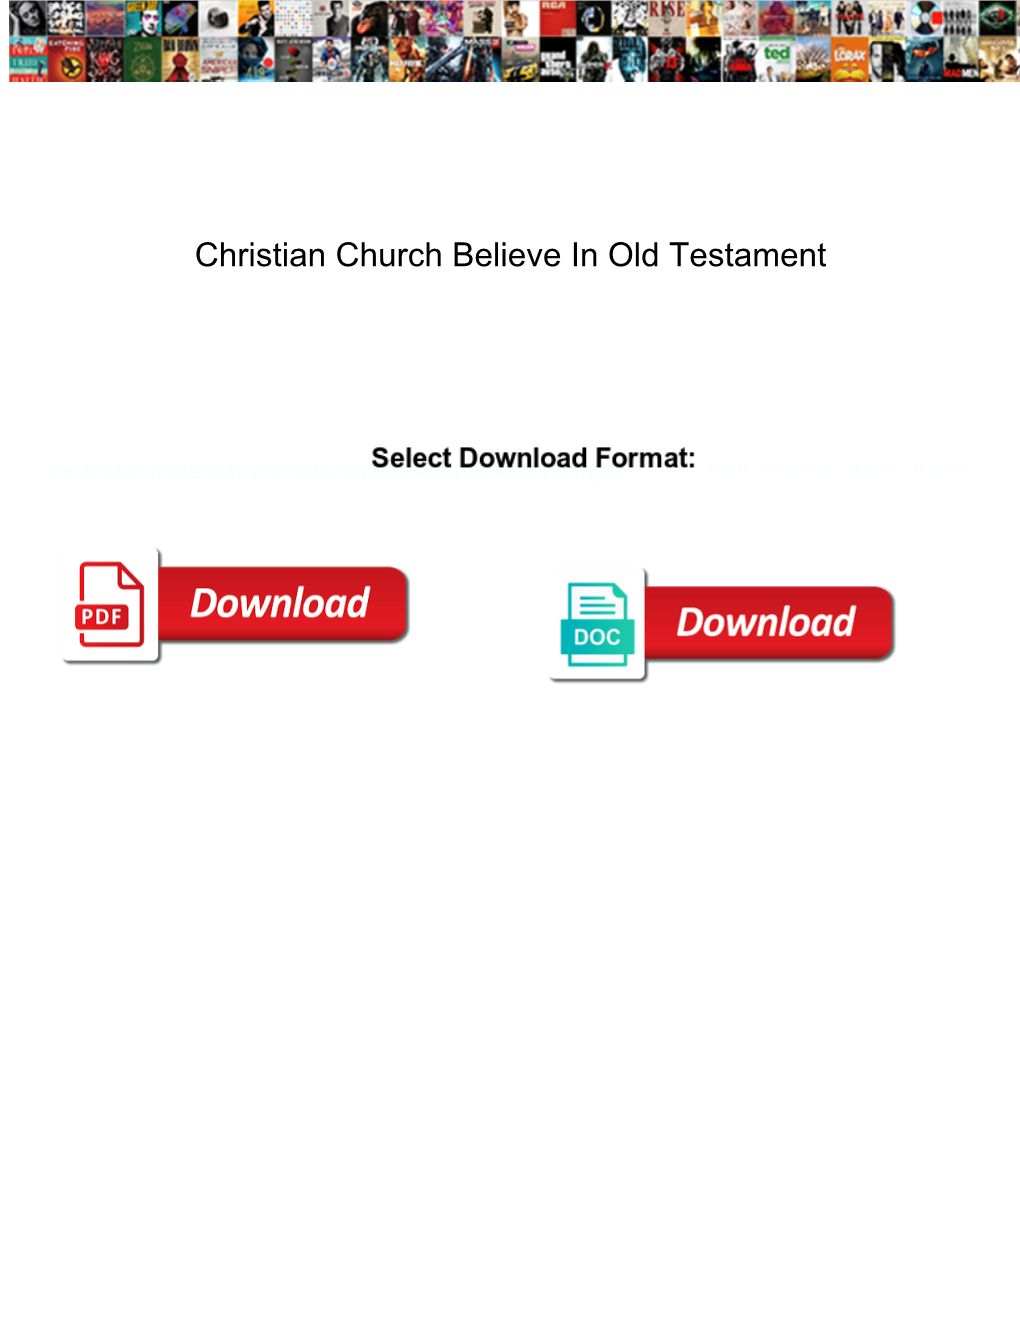 Christian Church Believe in Old Testament